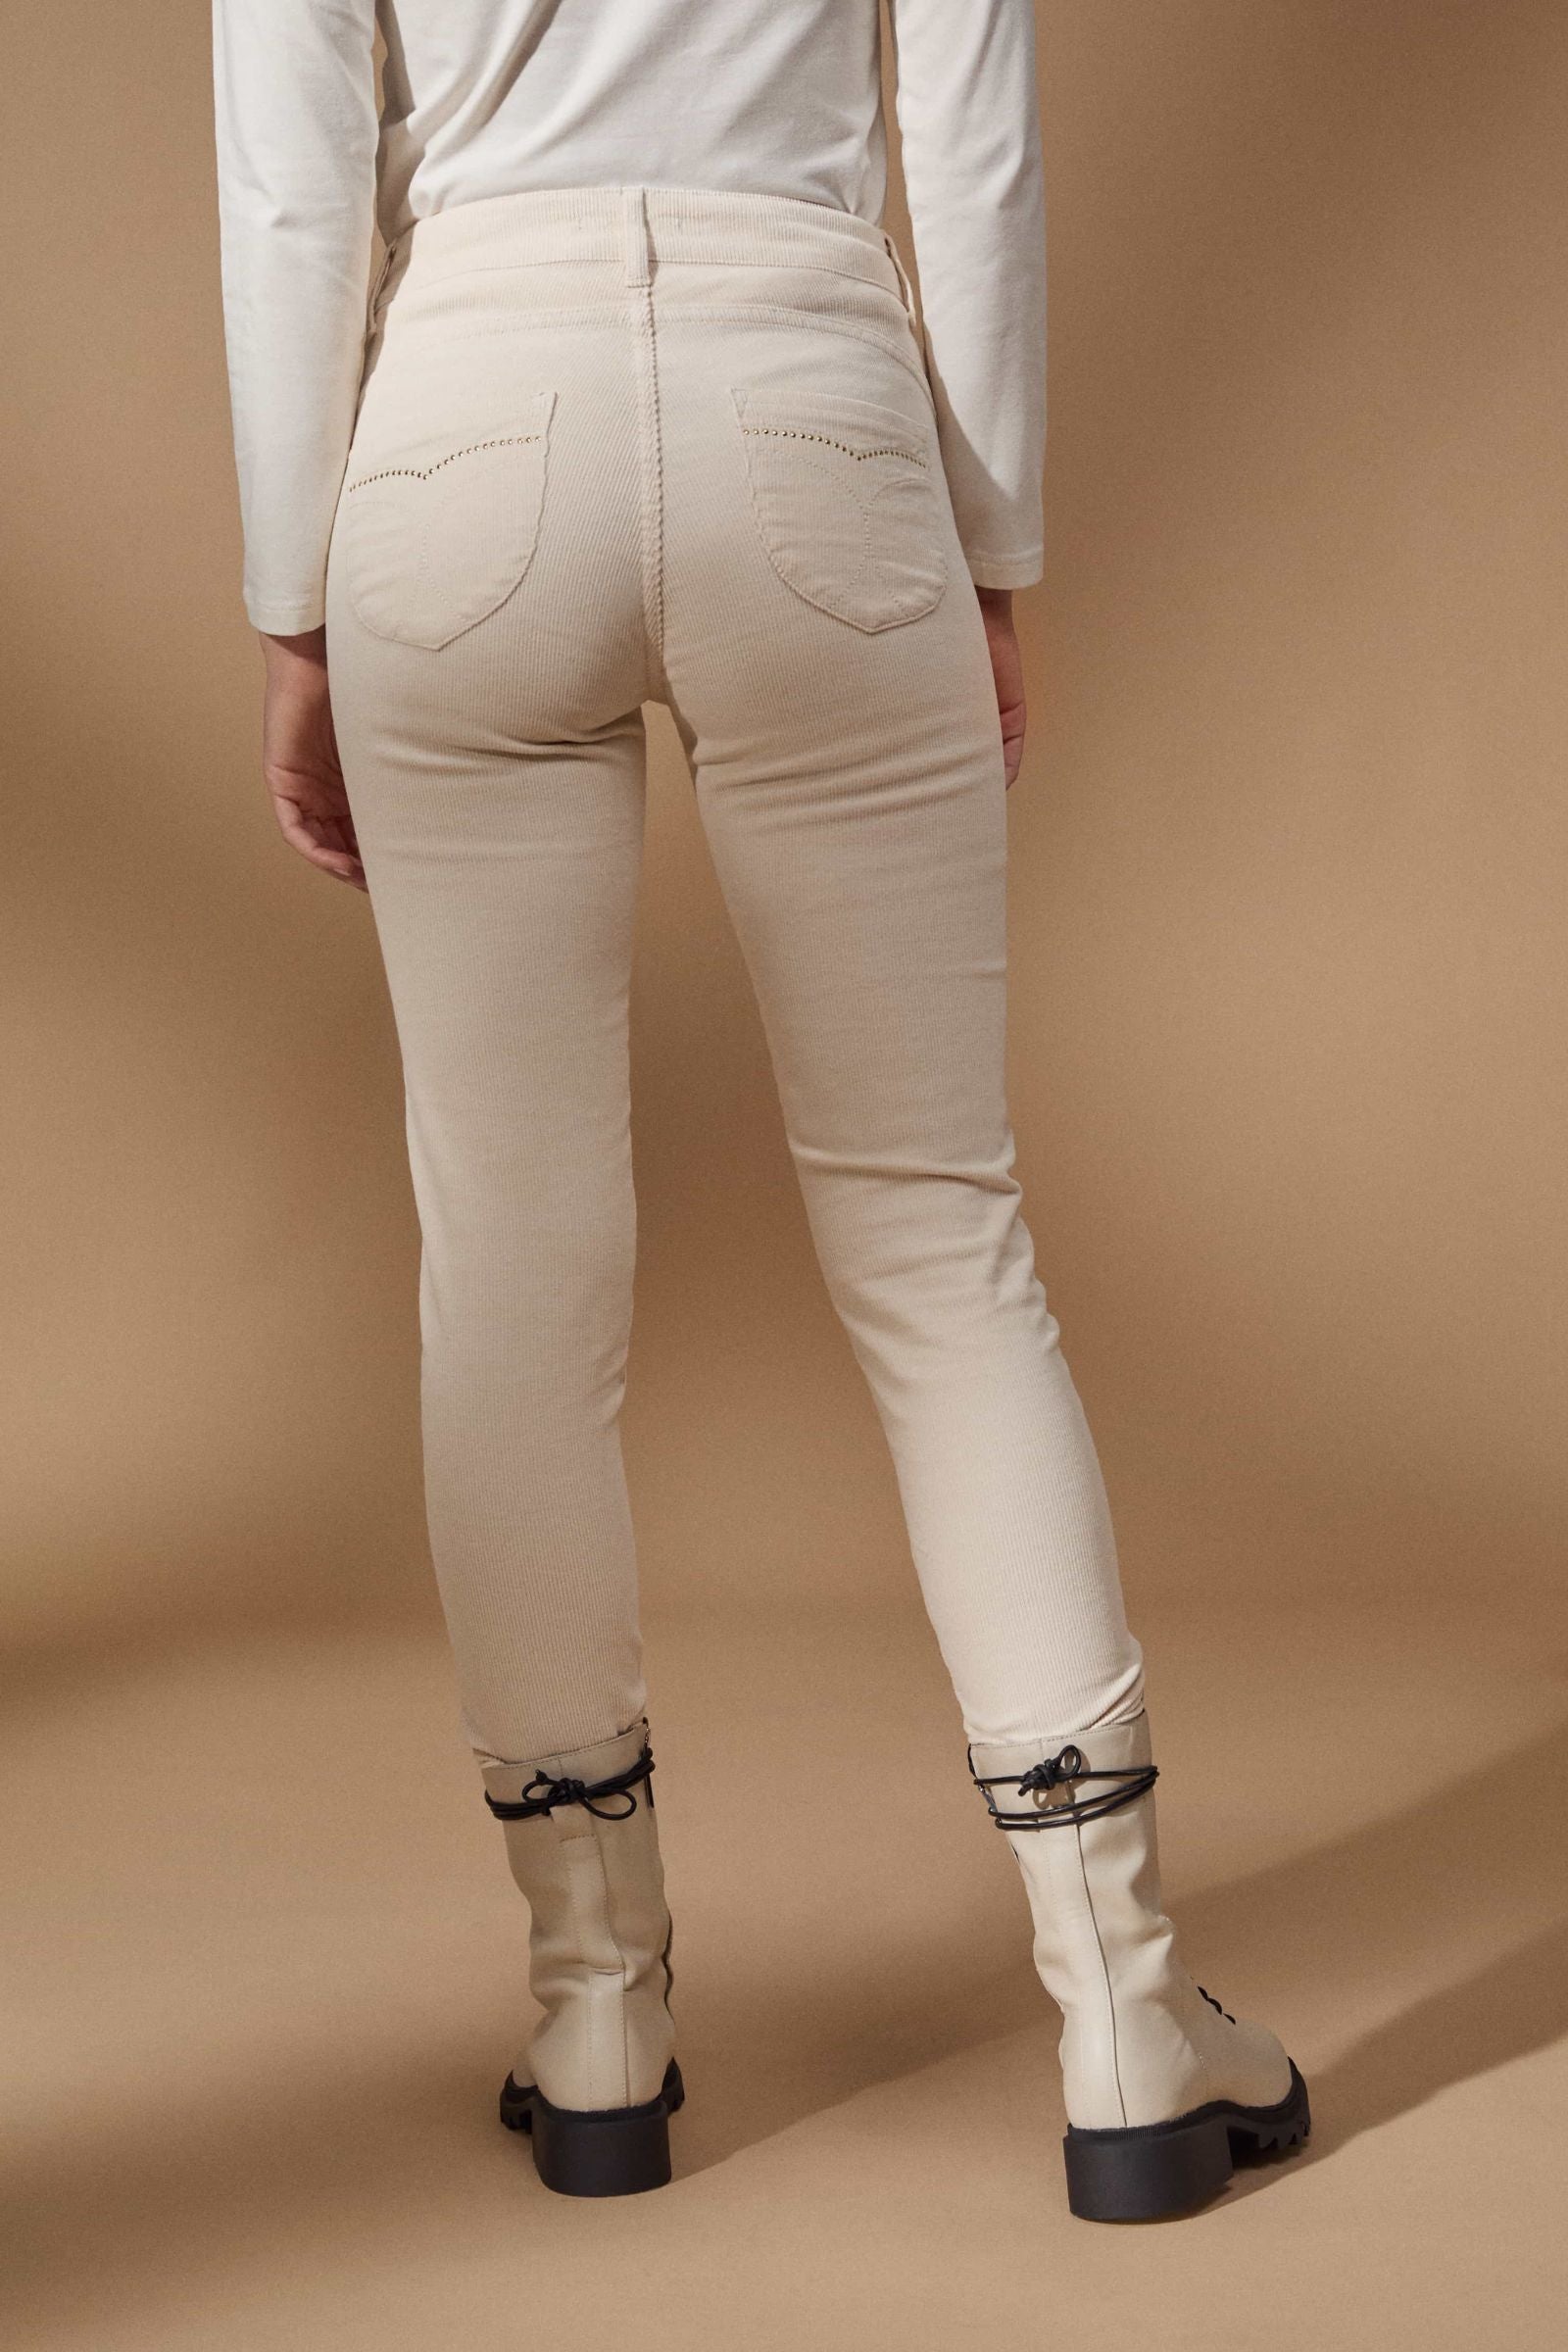 Pantalon de pana blanco crema cinco bolsillos con srtass Lolitas - lolitasyl.com